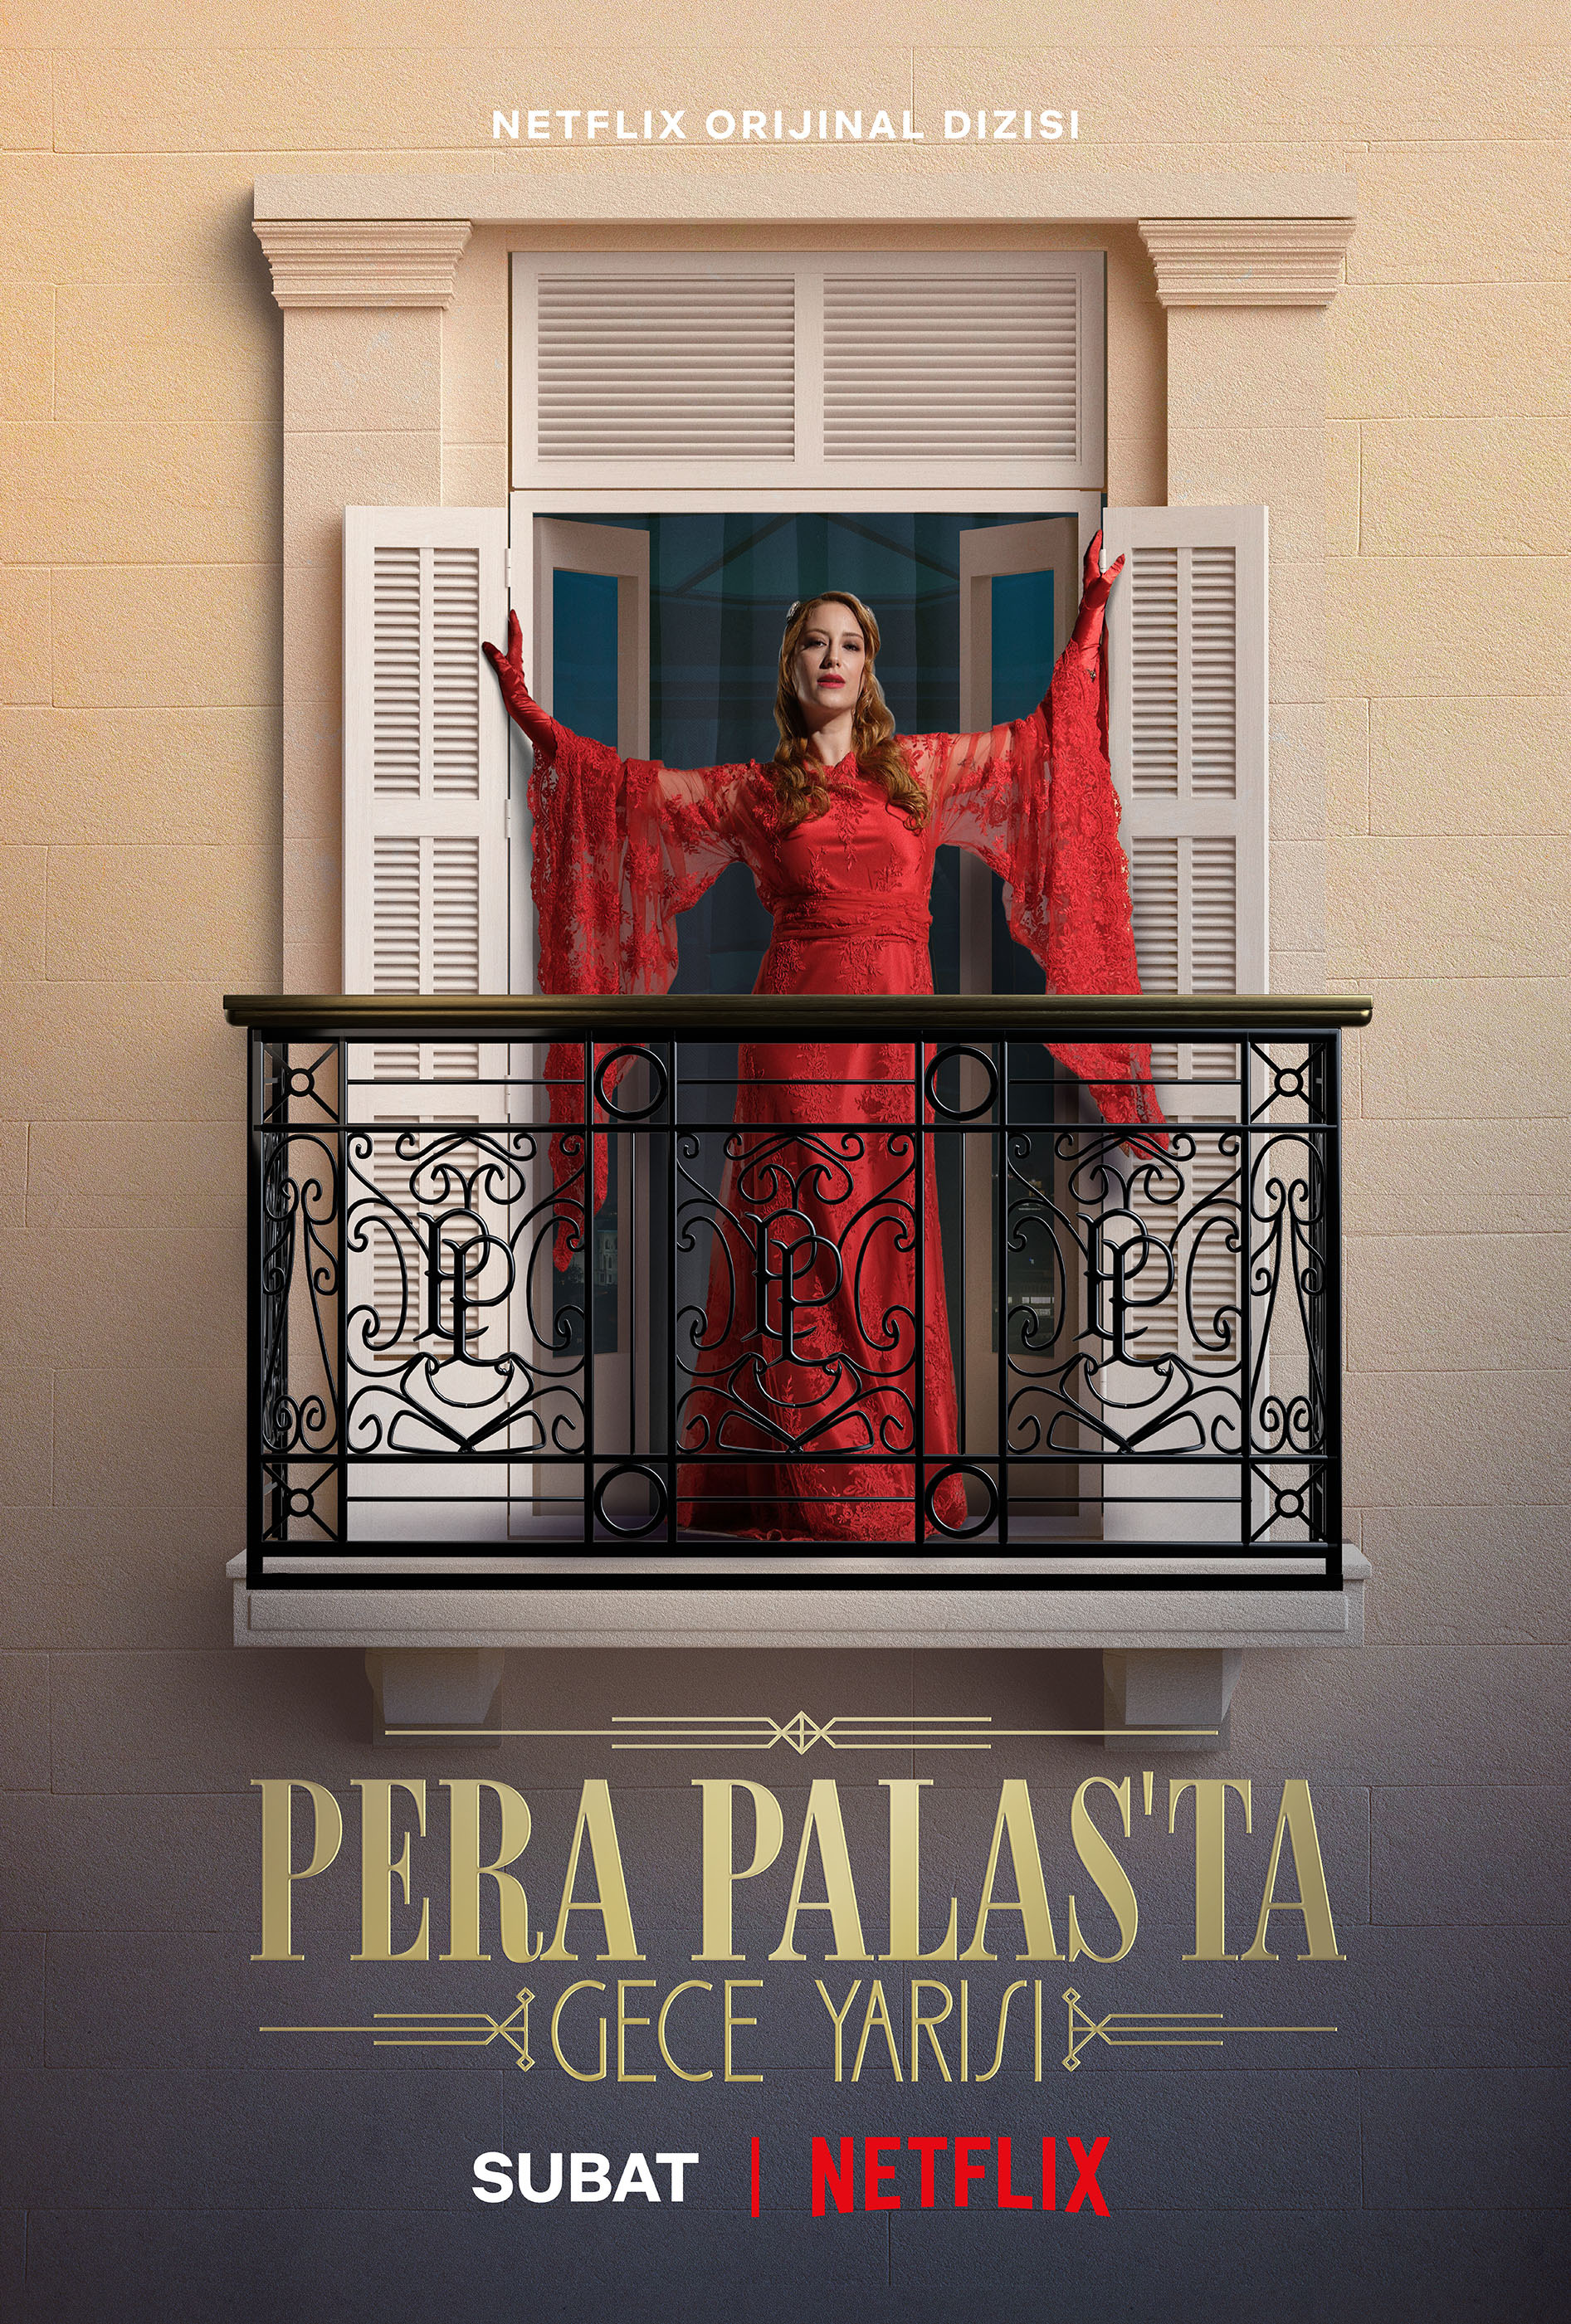 Mega Sized TV Poster Image for Pera Palas'ta Gece Yarisi (#8 of 10)